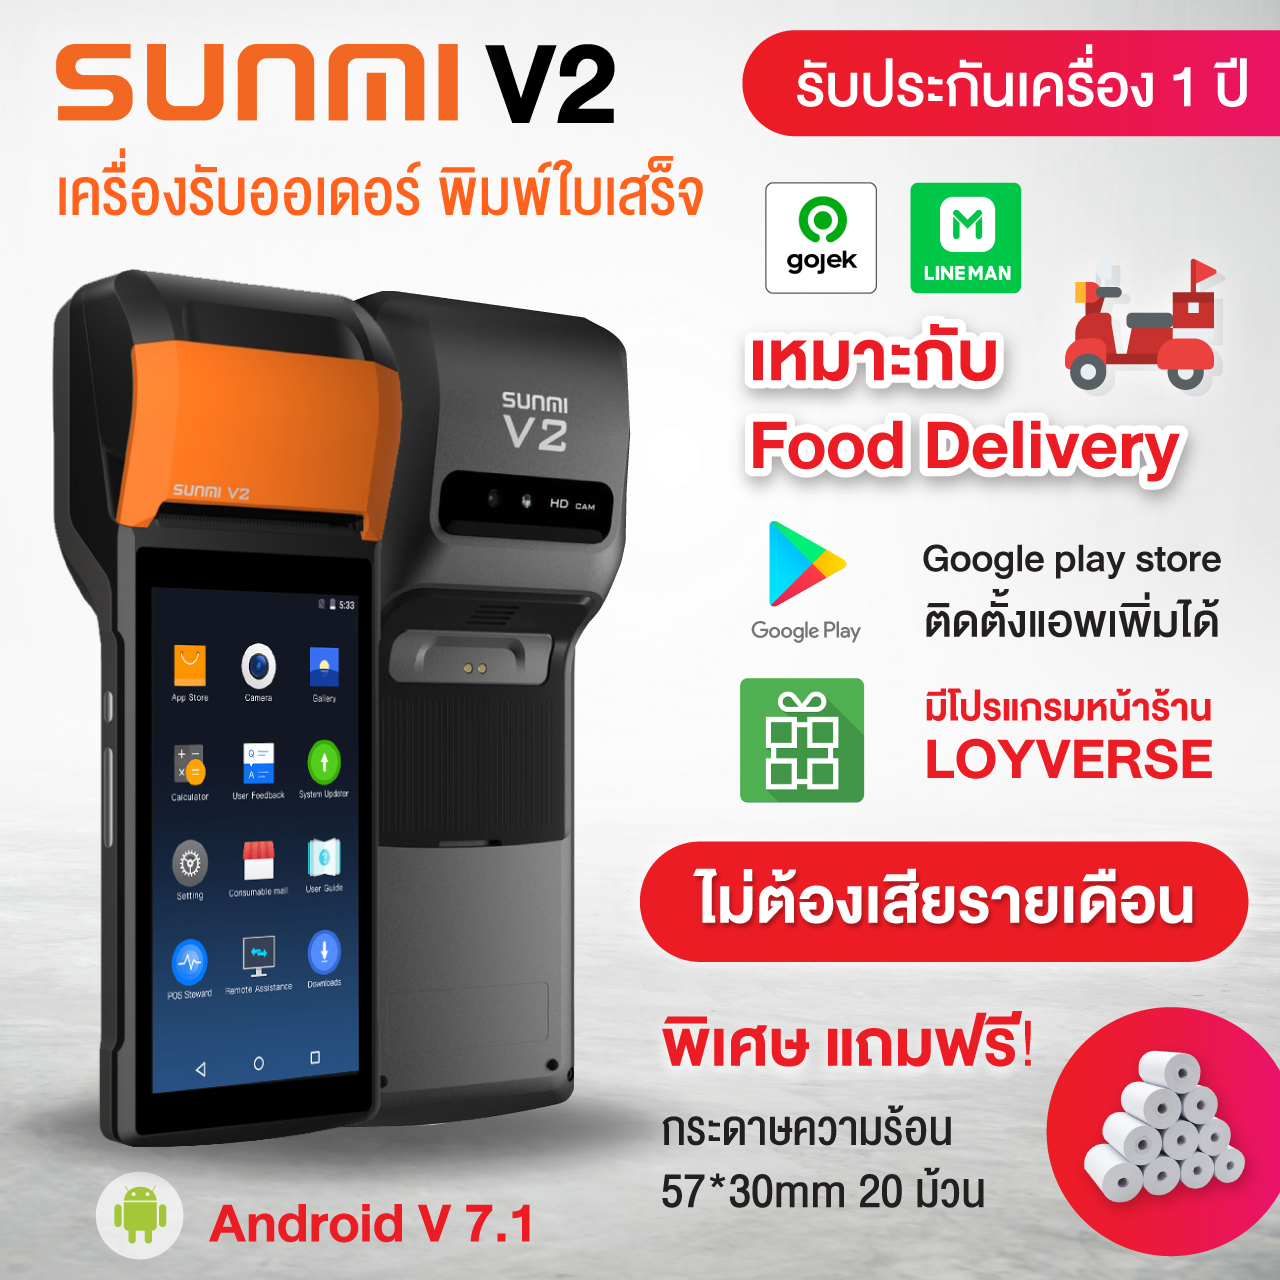 （2021）SUNMI V2 เครื่องคิดเงิน เครื่องพิมพ์ใบเสร็จ เหมาะกับ Food Delivery พร้อมปริ๊น รองรับ ios android พร้อมโปรแกรมขายหน้าร้าน Loyverse POS Android 7.1 ประกัน 1ปี